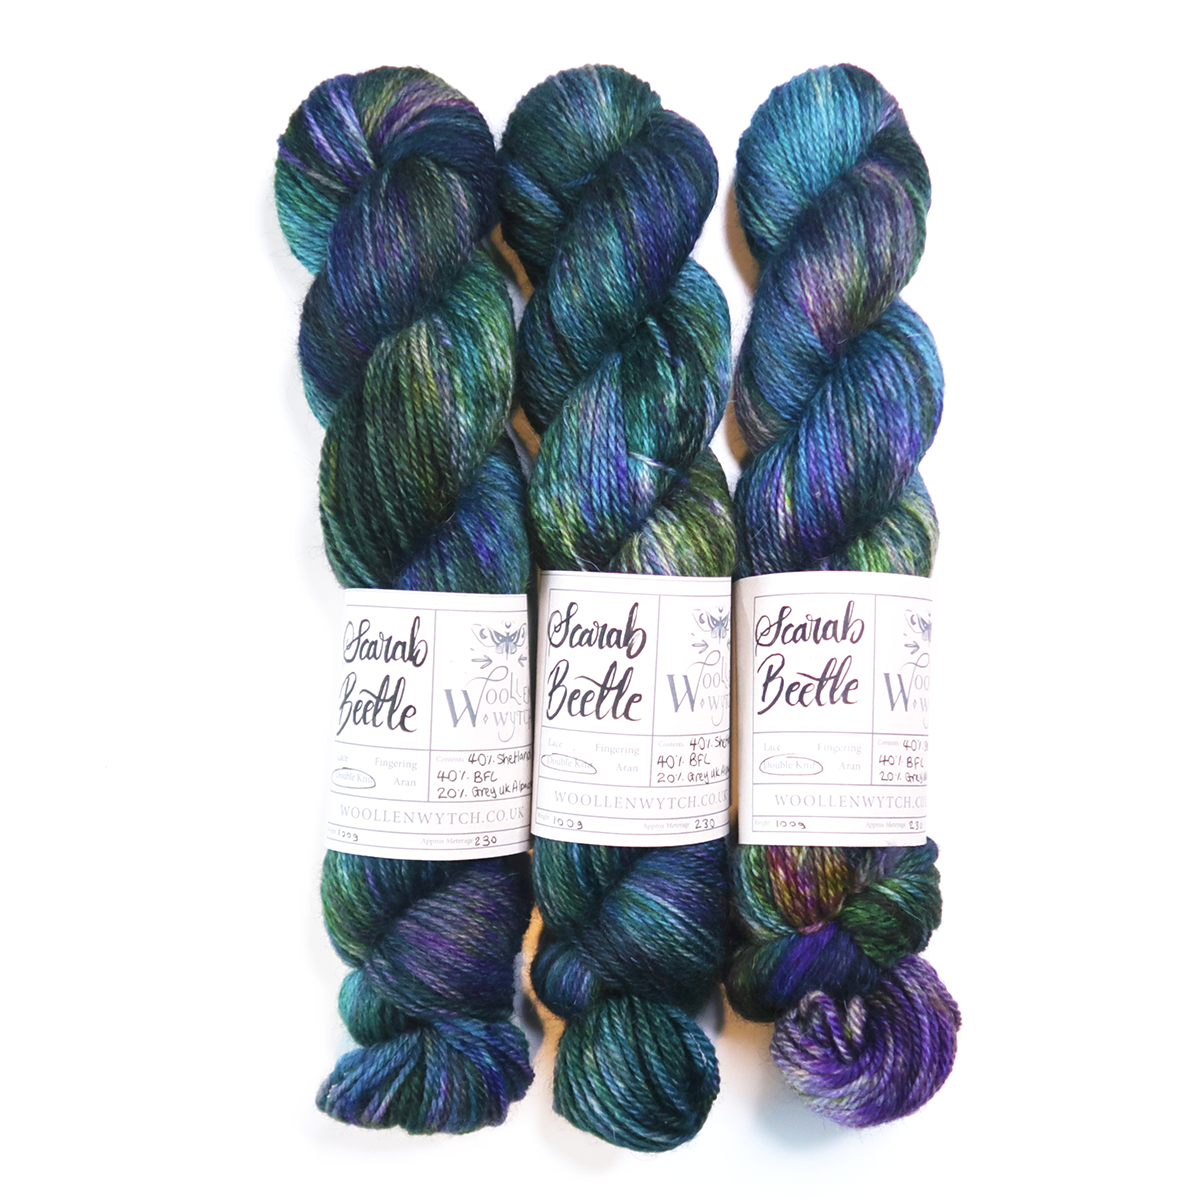 Hand dyed double knit yarn british wool shetland woollen wytch